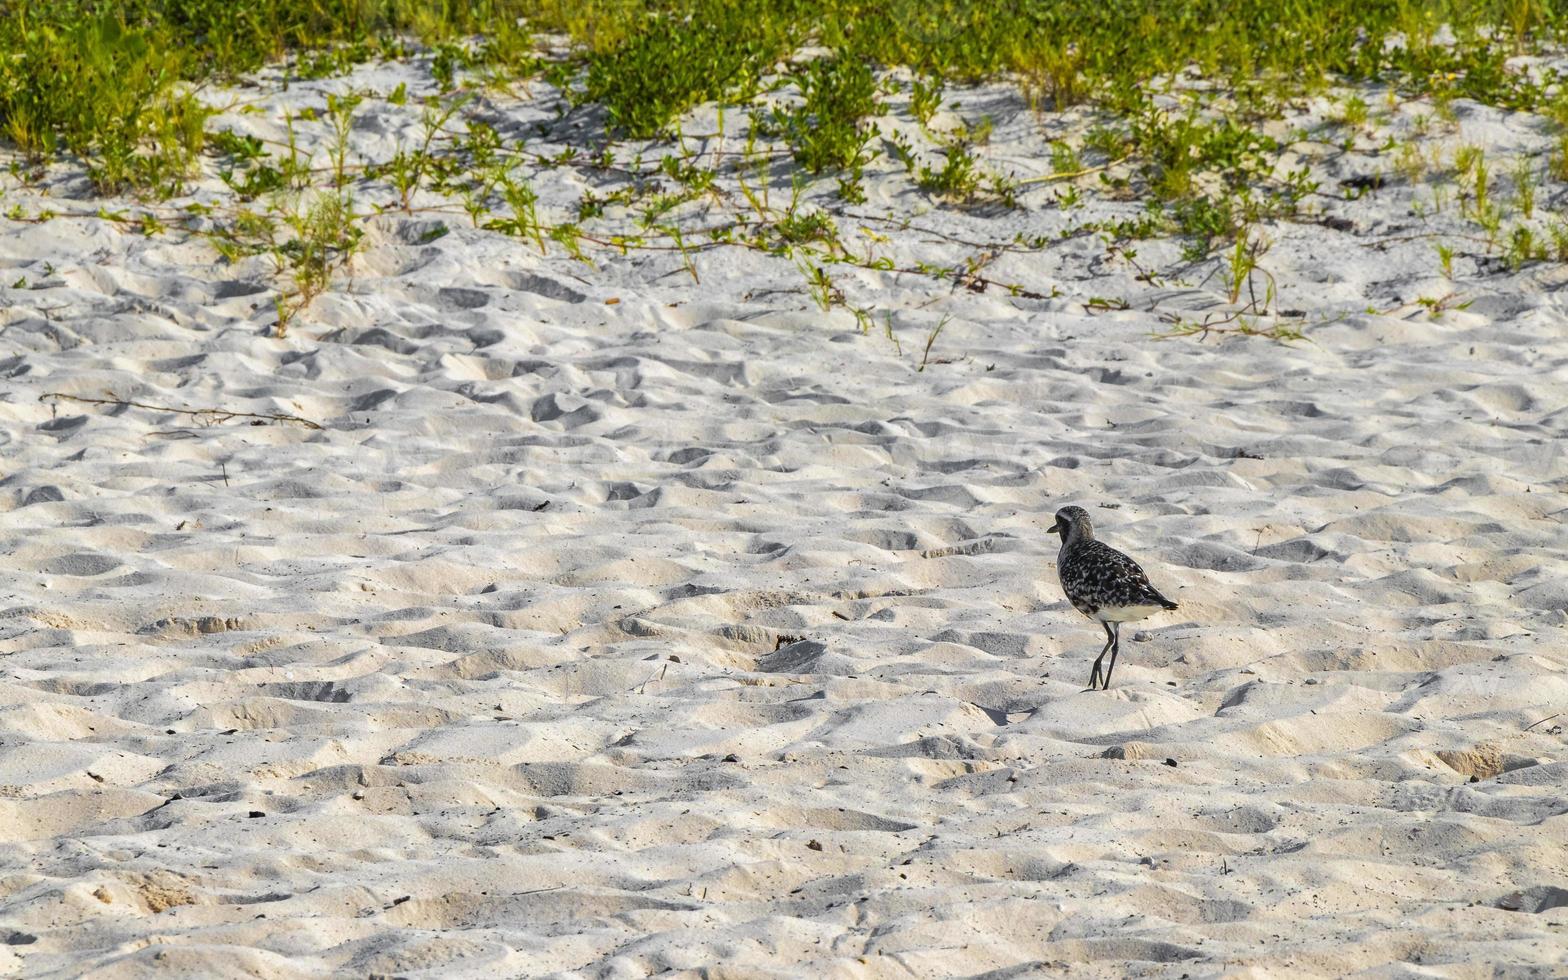 maçarico snipe maçaricos pássaro pássaros comendo sargazo na praia méxico. foto